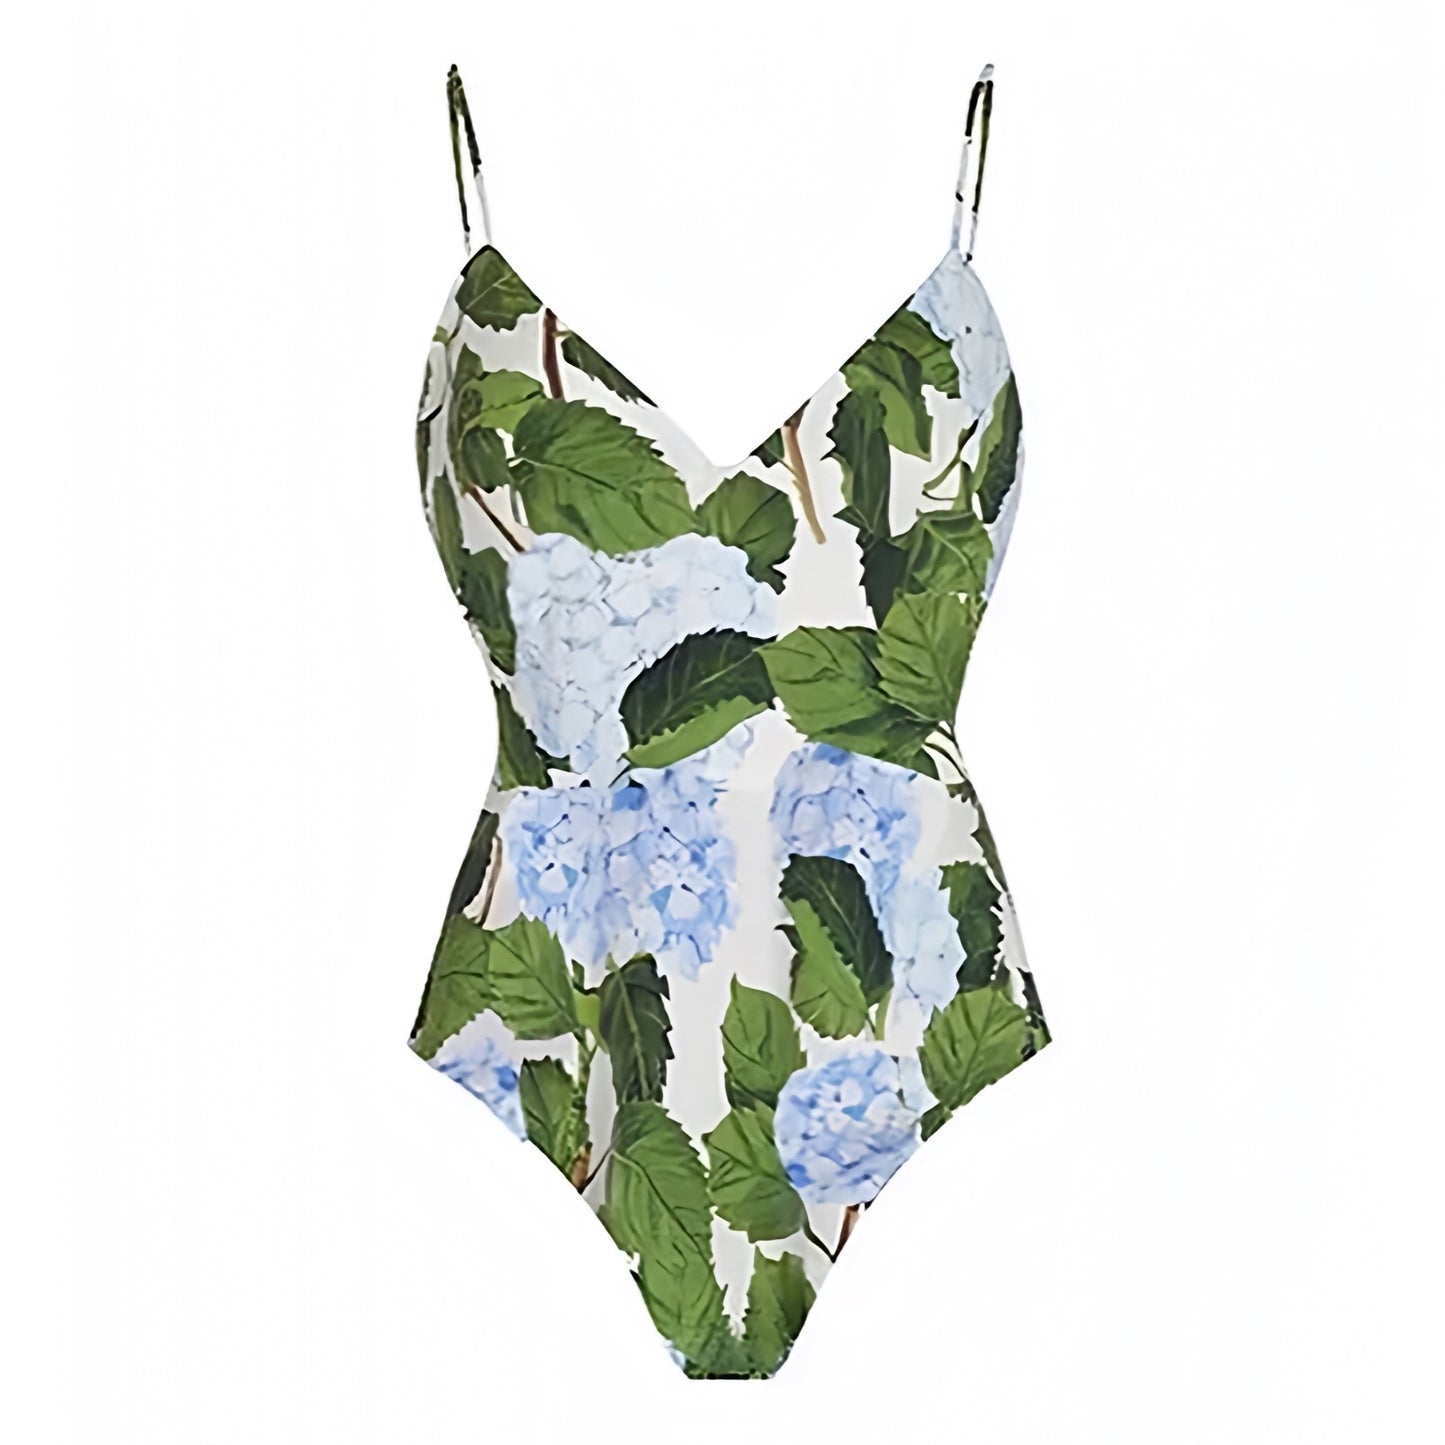 floral-print-light-blue-white-green-multi-color-hydrangea-flower-patterned-slim-fit-bodycon-v-neck-sleeveless-spaghetti-strap-backless-open-back-cheeky-thong-push-up-wireless-one-piece-swimsuit-swimwear-bathing-suit-women-ladies-teens-tweens-chic-trendy-spring-2024-summer-elegant-feminine-classy-classic-preppy-style-coastal-granddaughter-grandmillennial-beach-wear-revolve-blackbough-frankies-bikinis-dupe